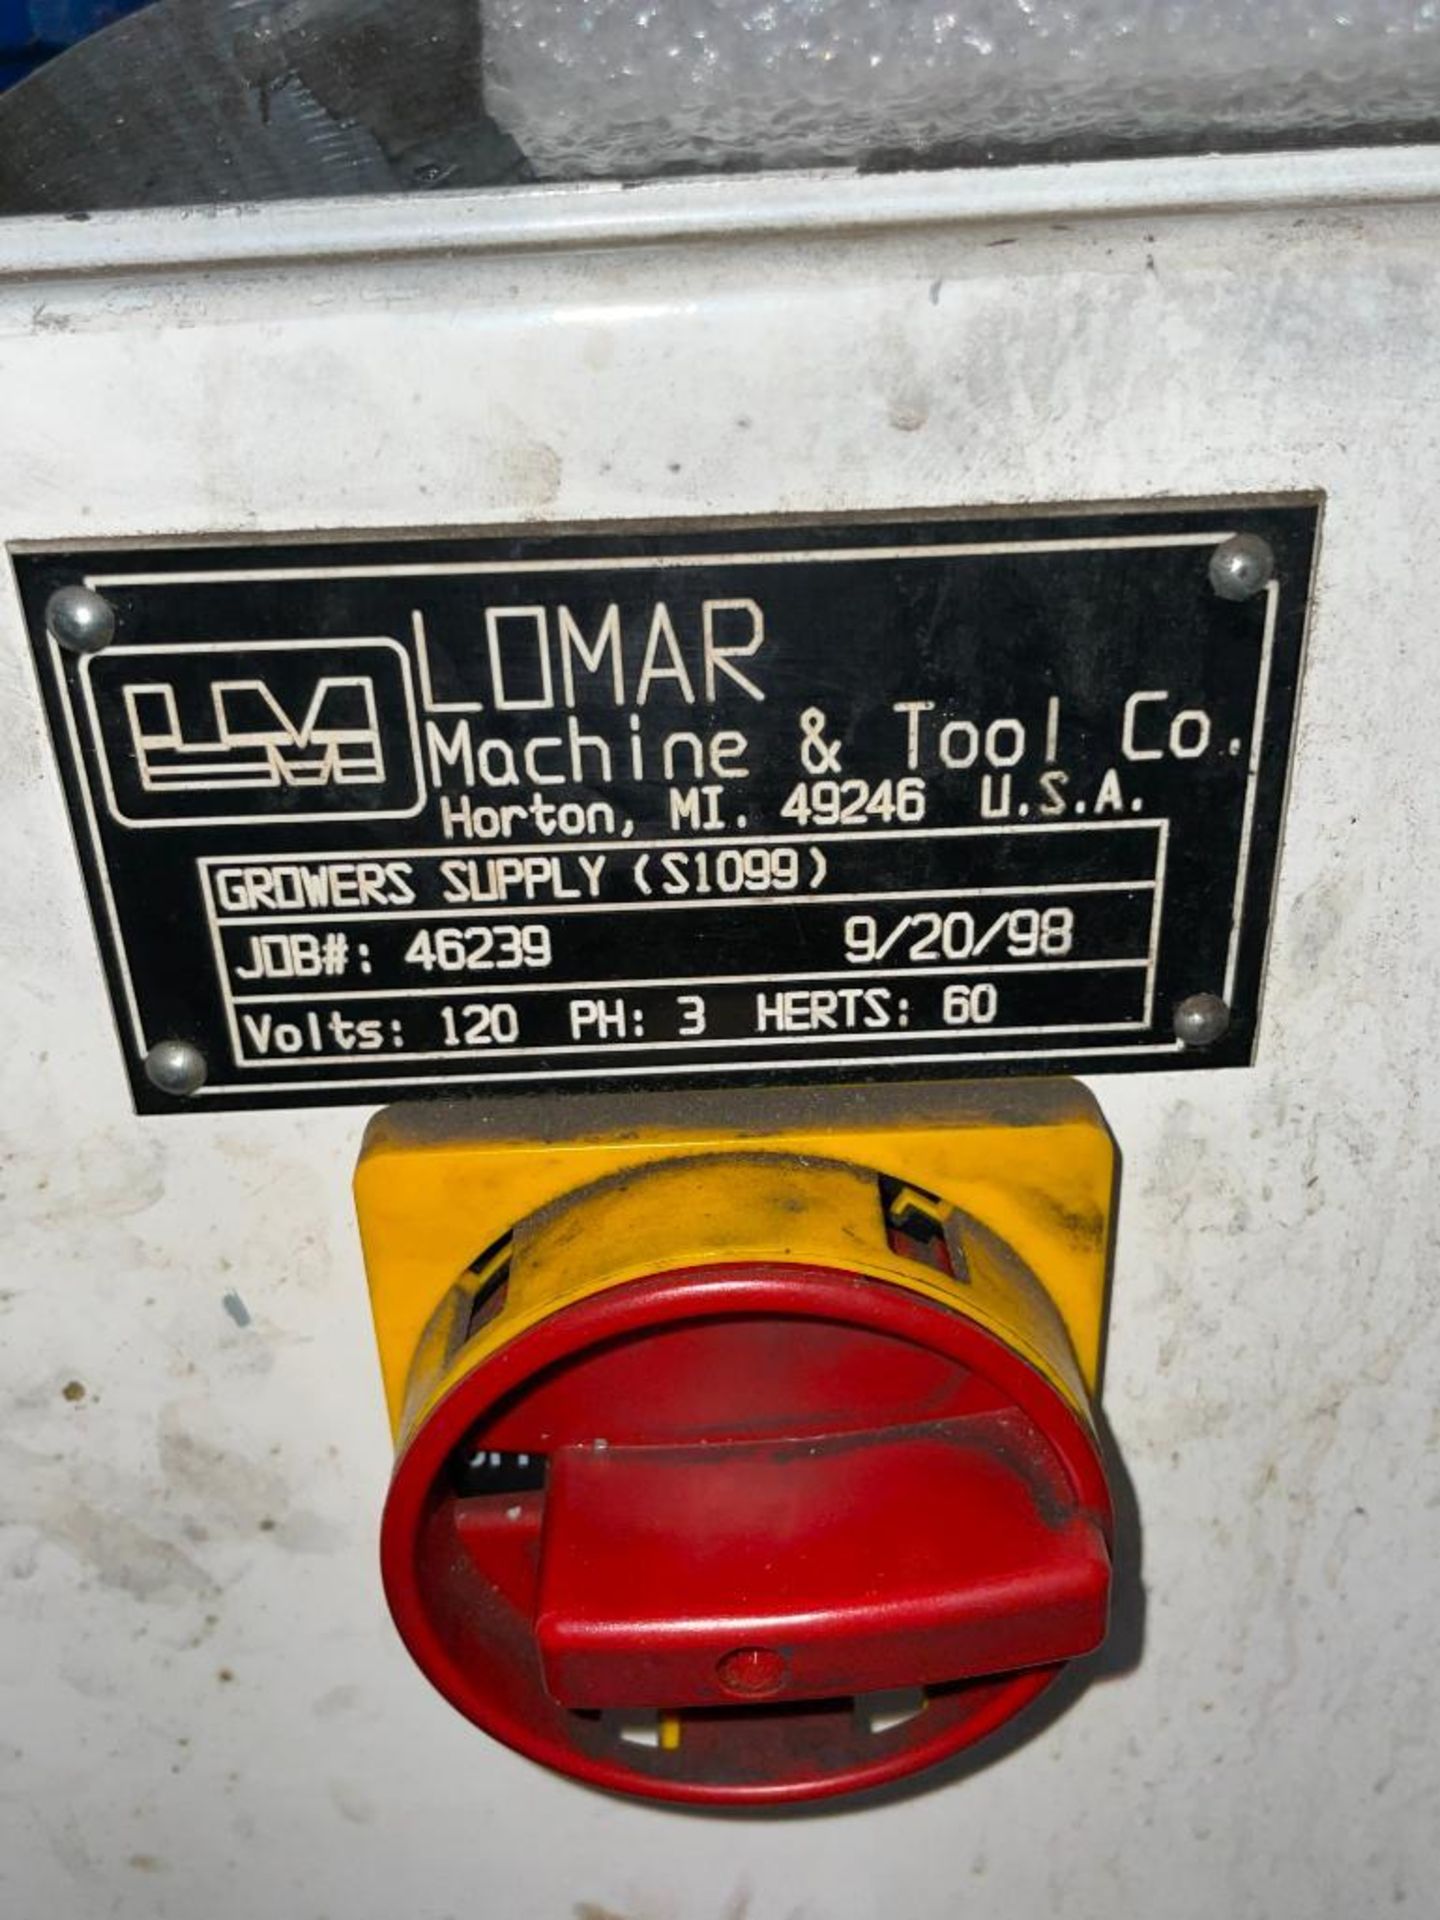 Lomar Model S1099A Portable Vertical Bending Machine - Image 4 of 10